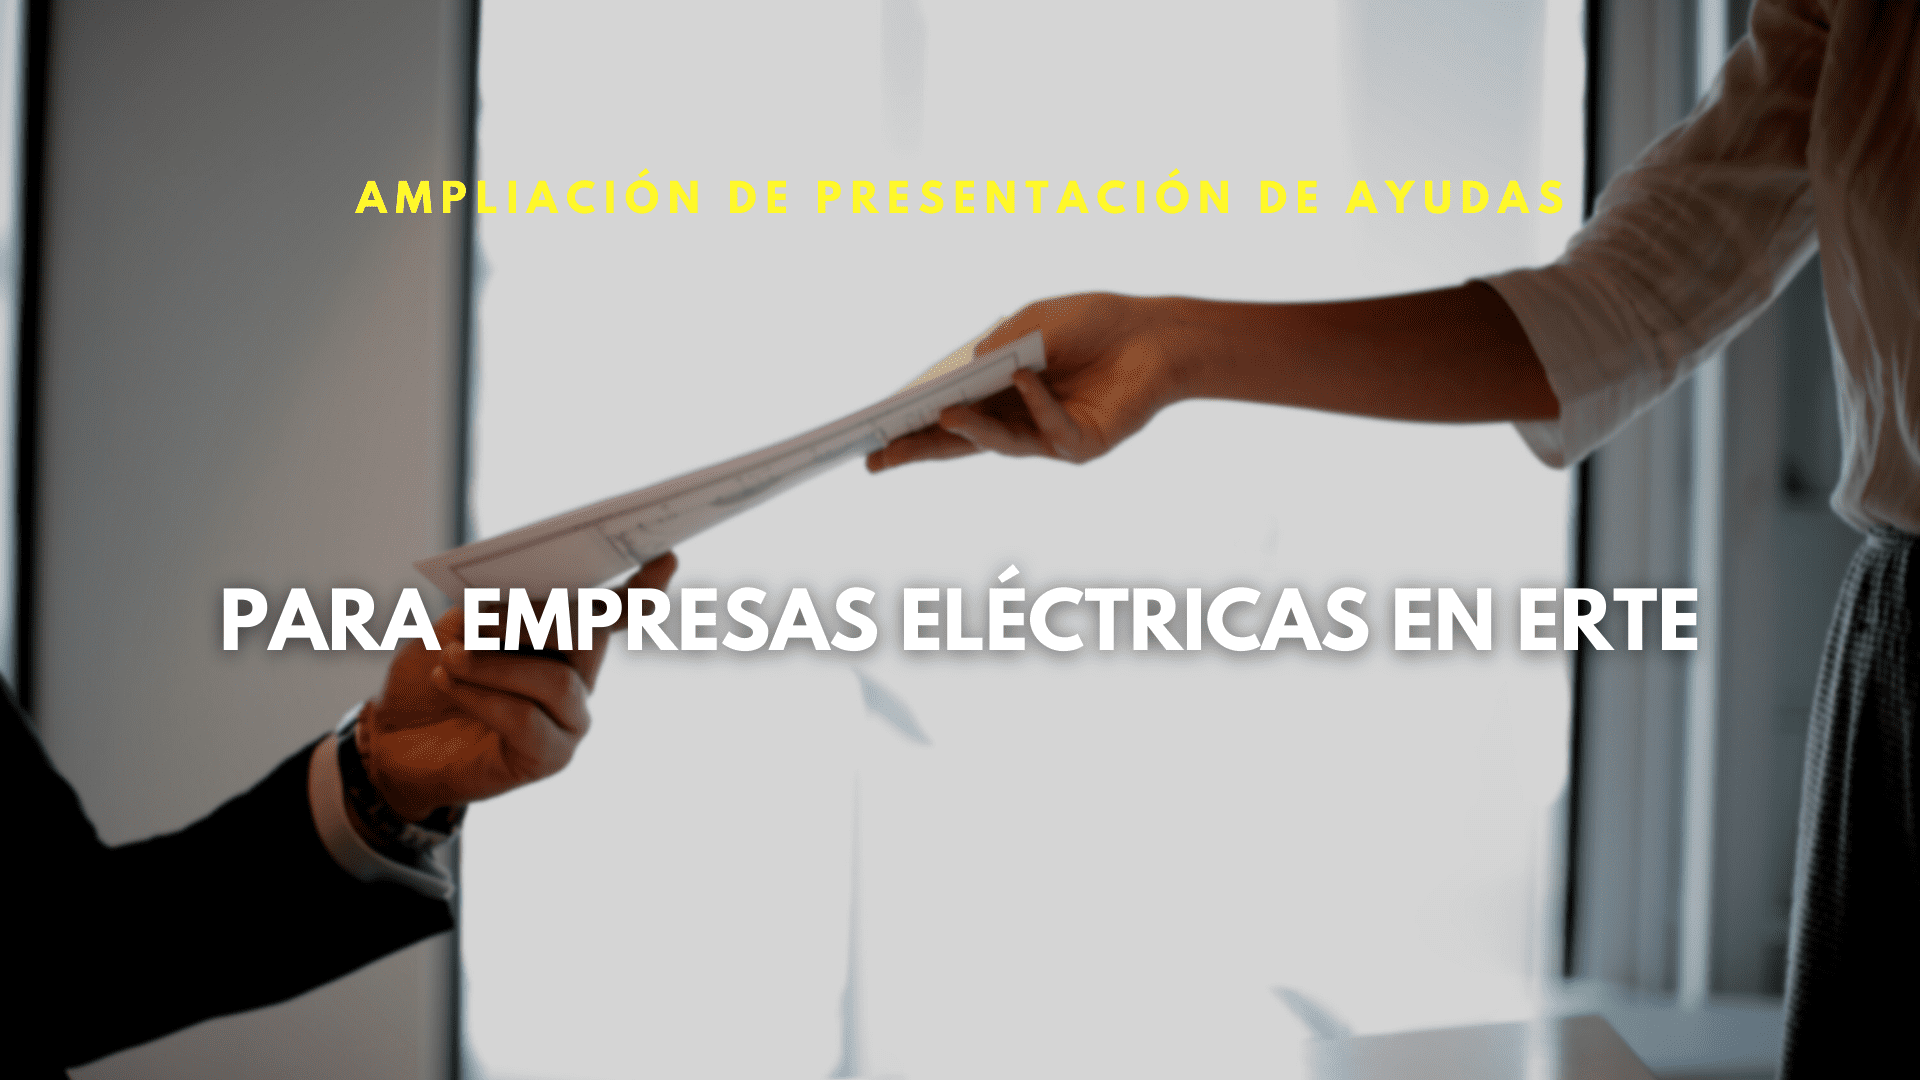 Ayudas a empresas instaladoras eléctricas en ERTE